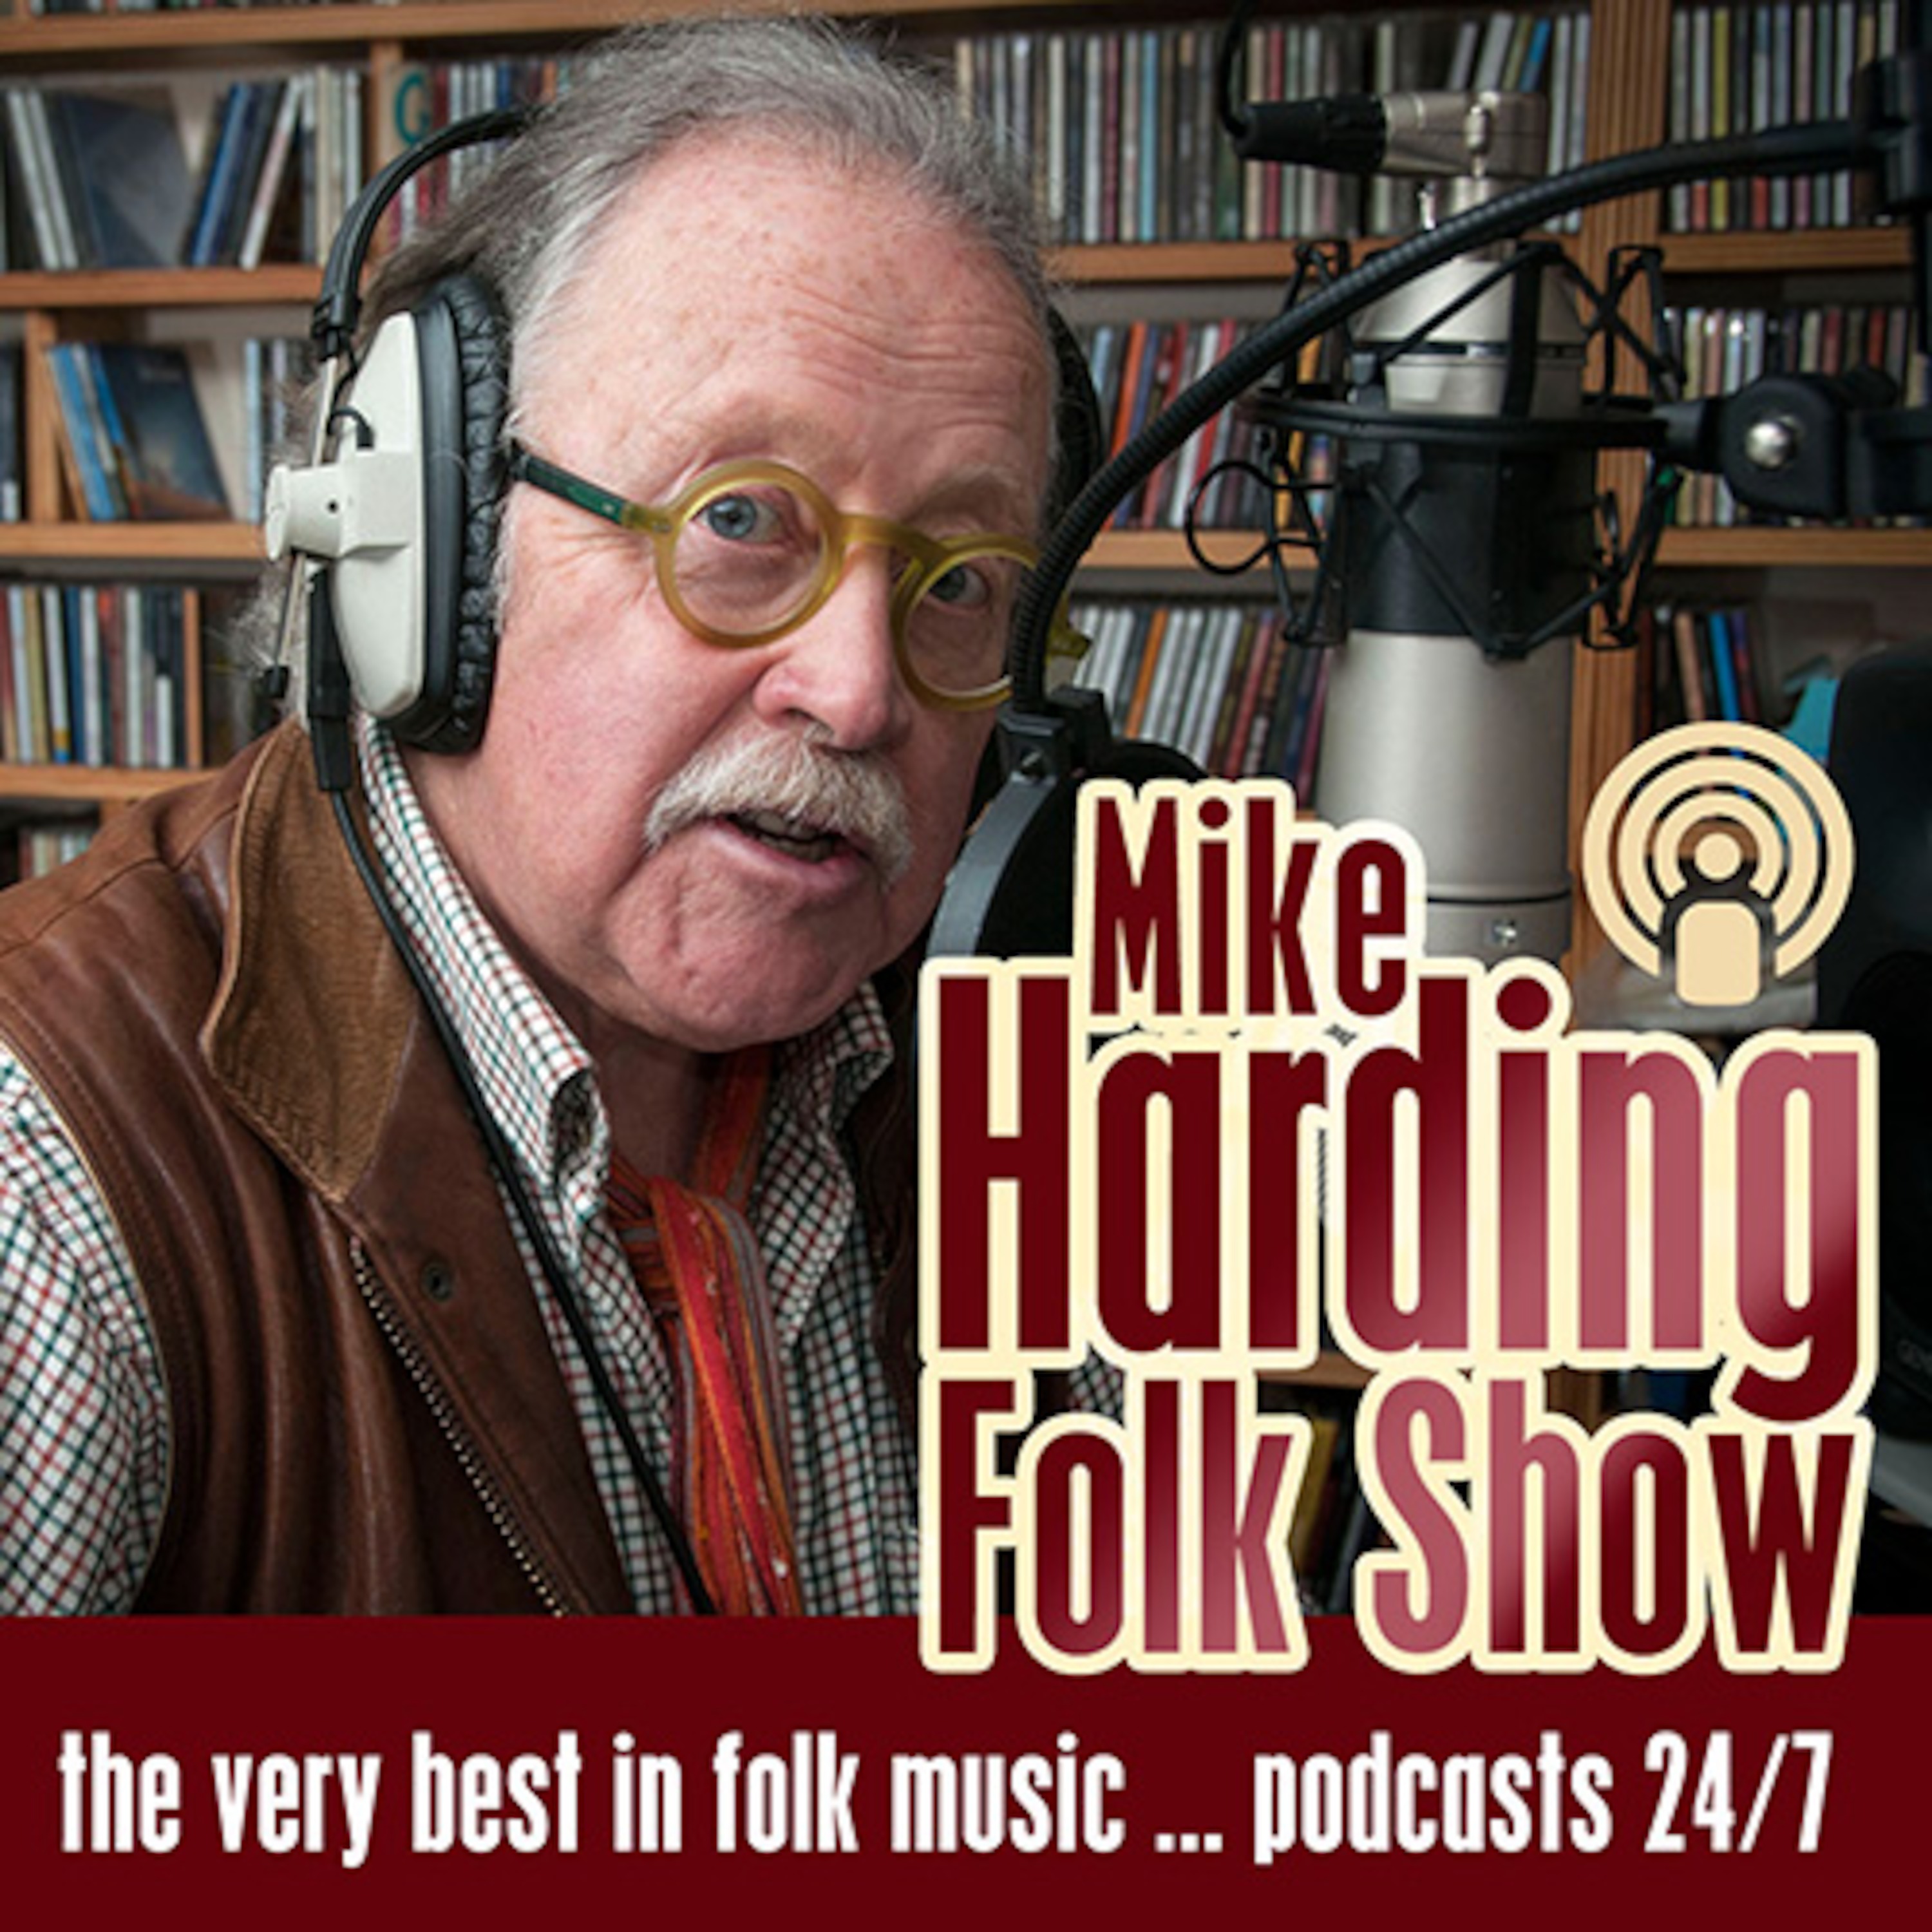 Mike Harding Folk Show 25